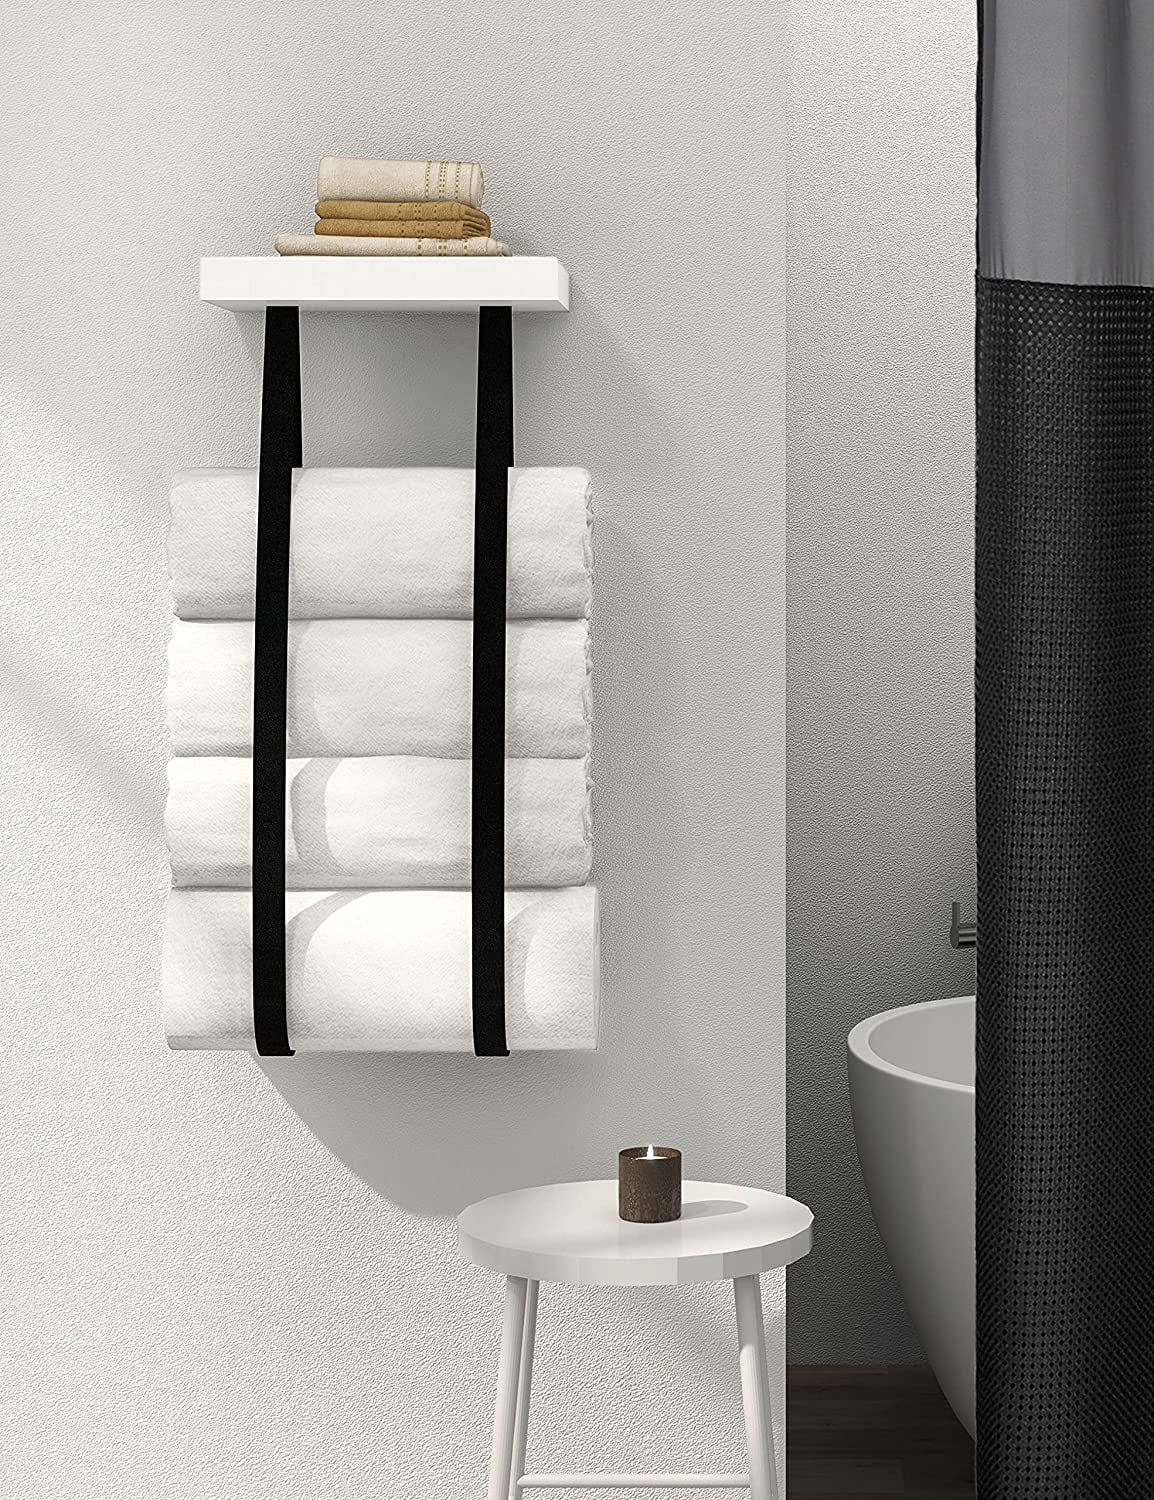 Hand Towels - Farmhouse Bathroom Décor – Rustic Country Bathroom Accessory  – Set of 2